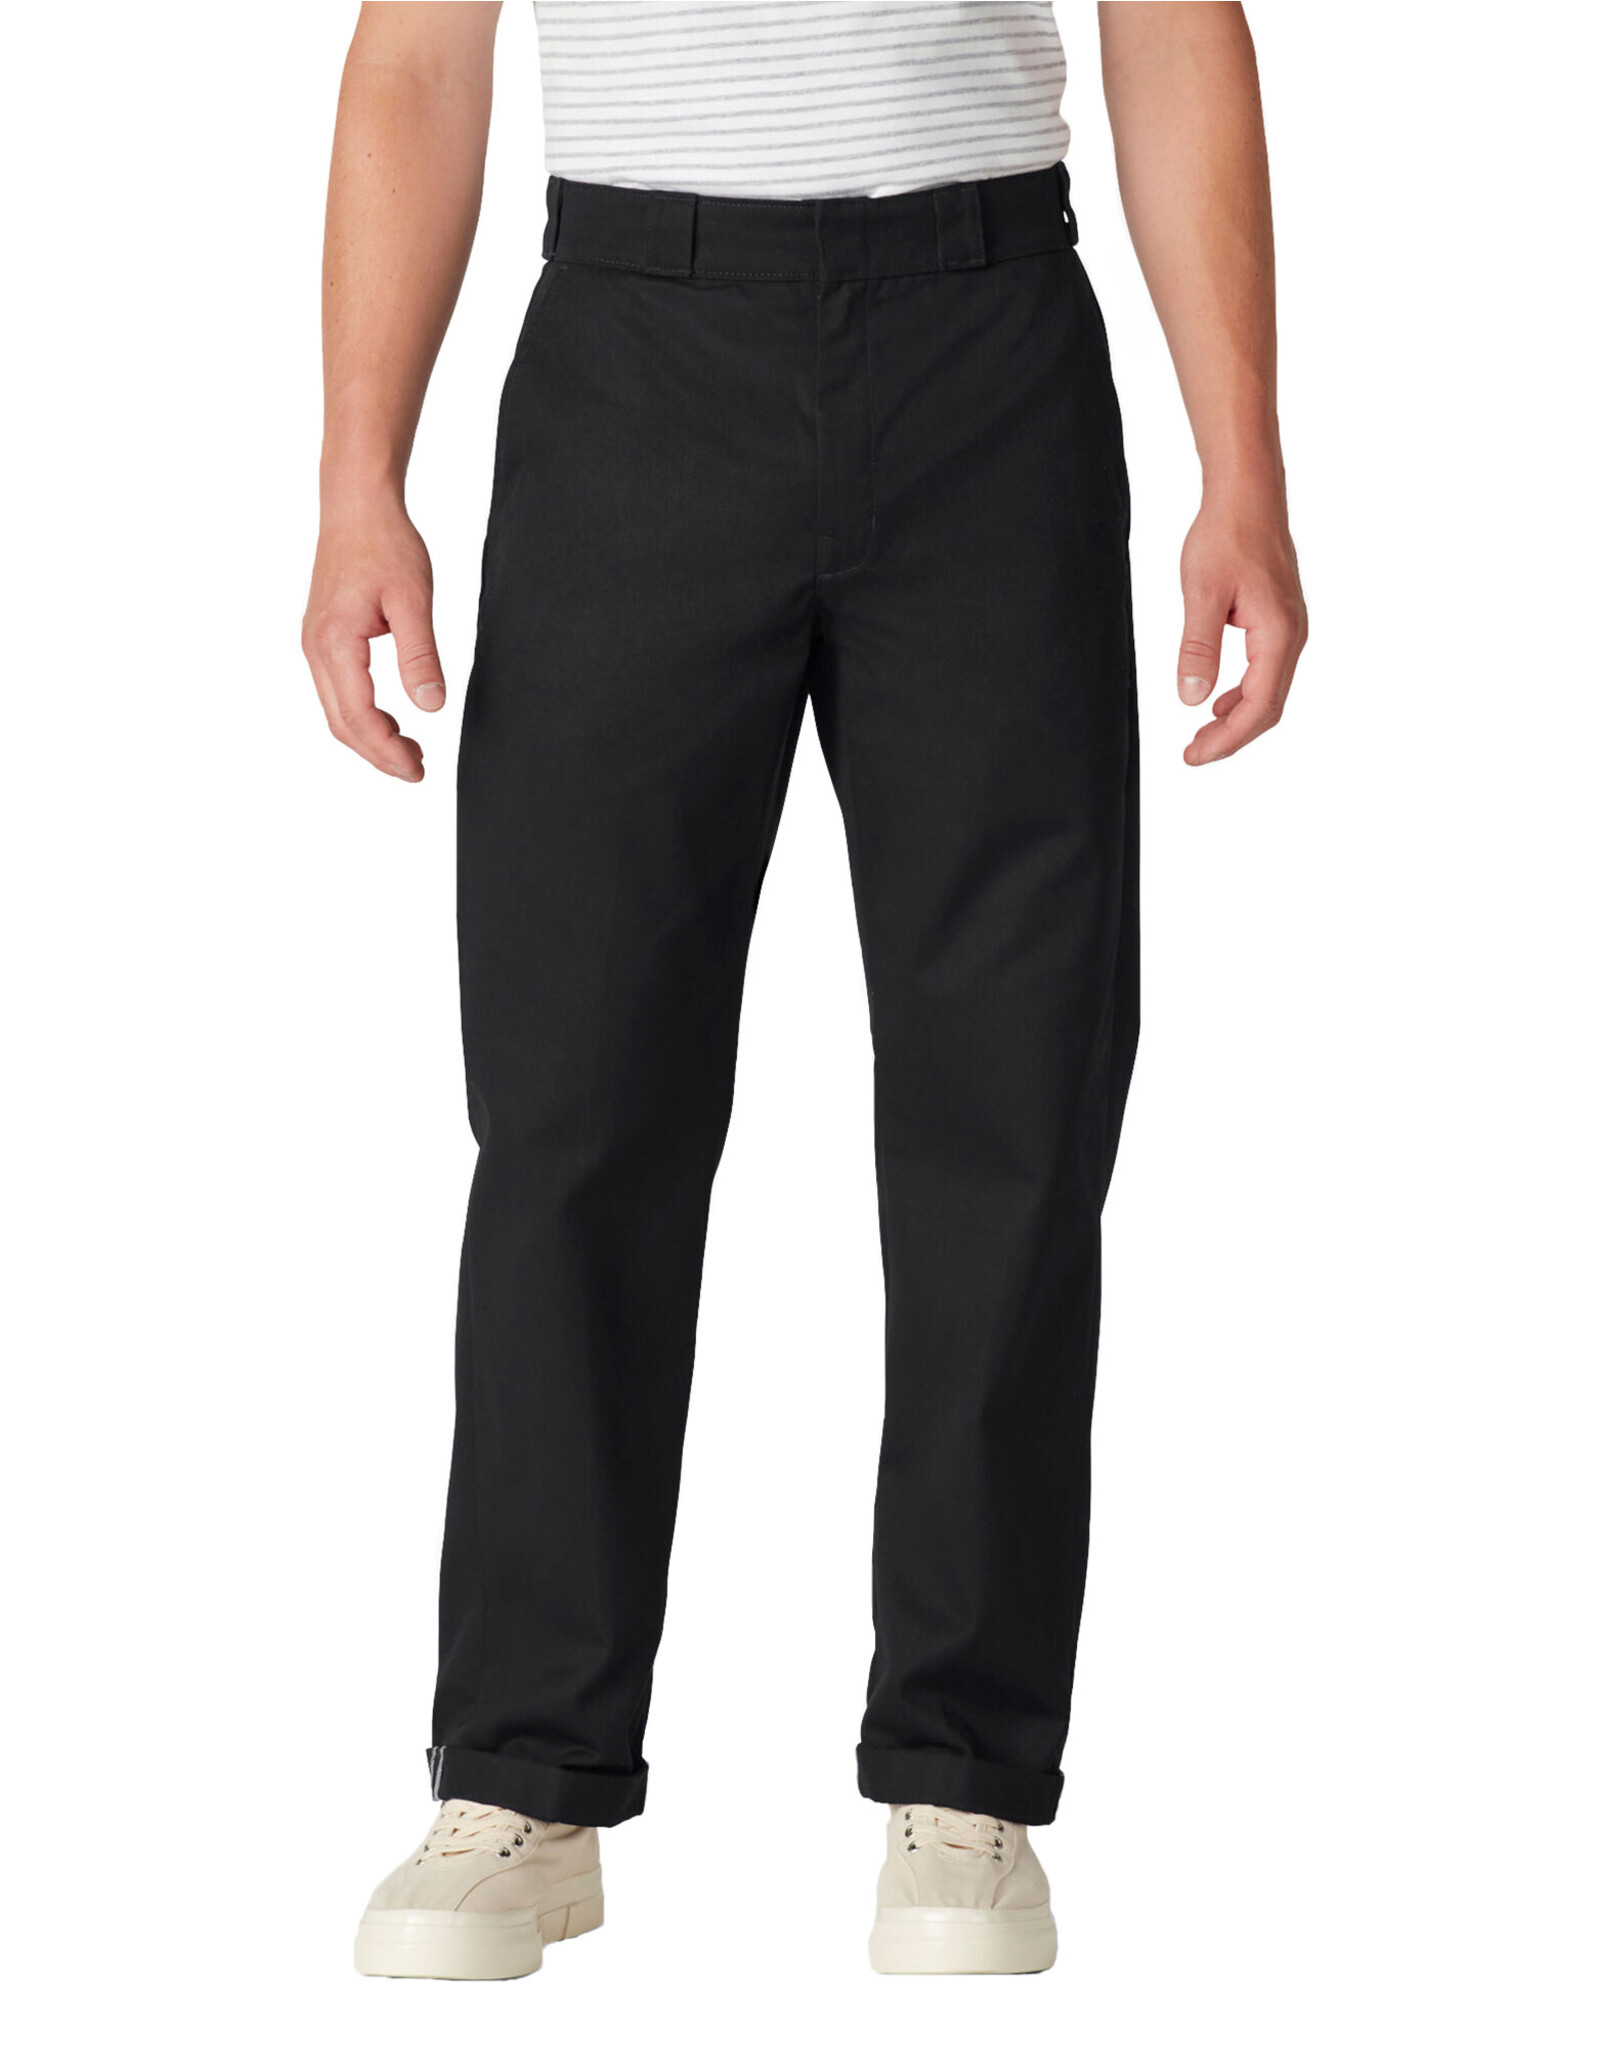 DICKIES Regular Fit Cuffed Work Pants Black - WPR05BKX